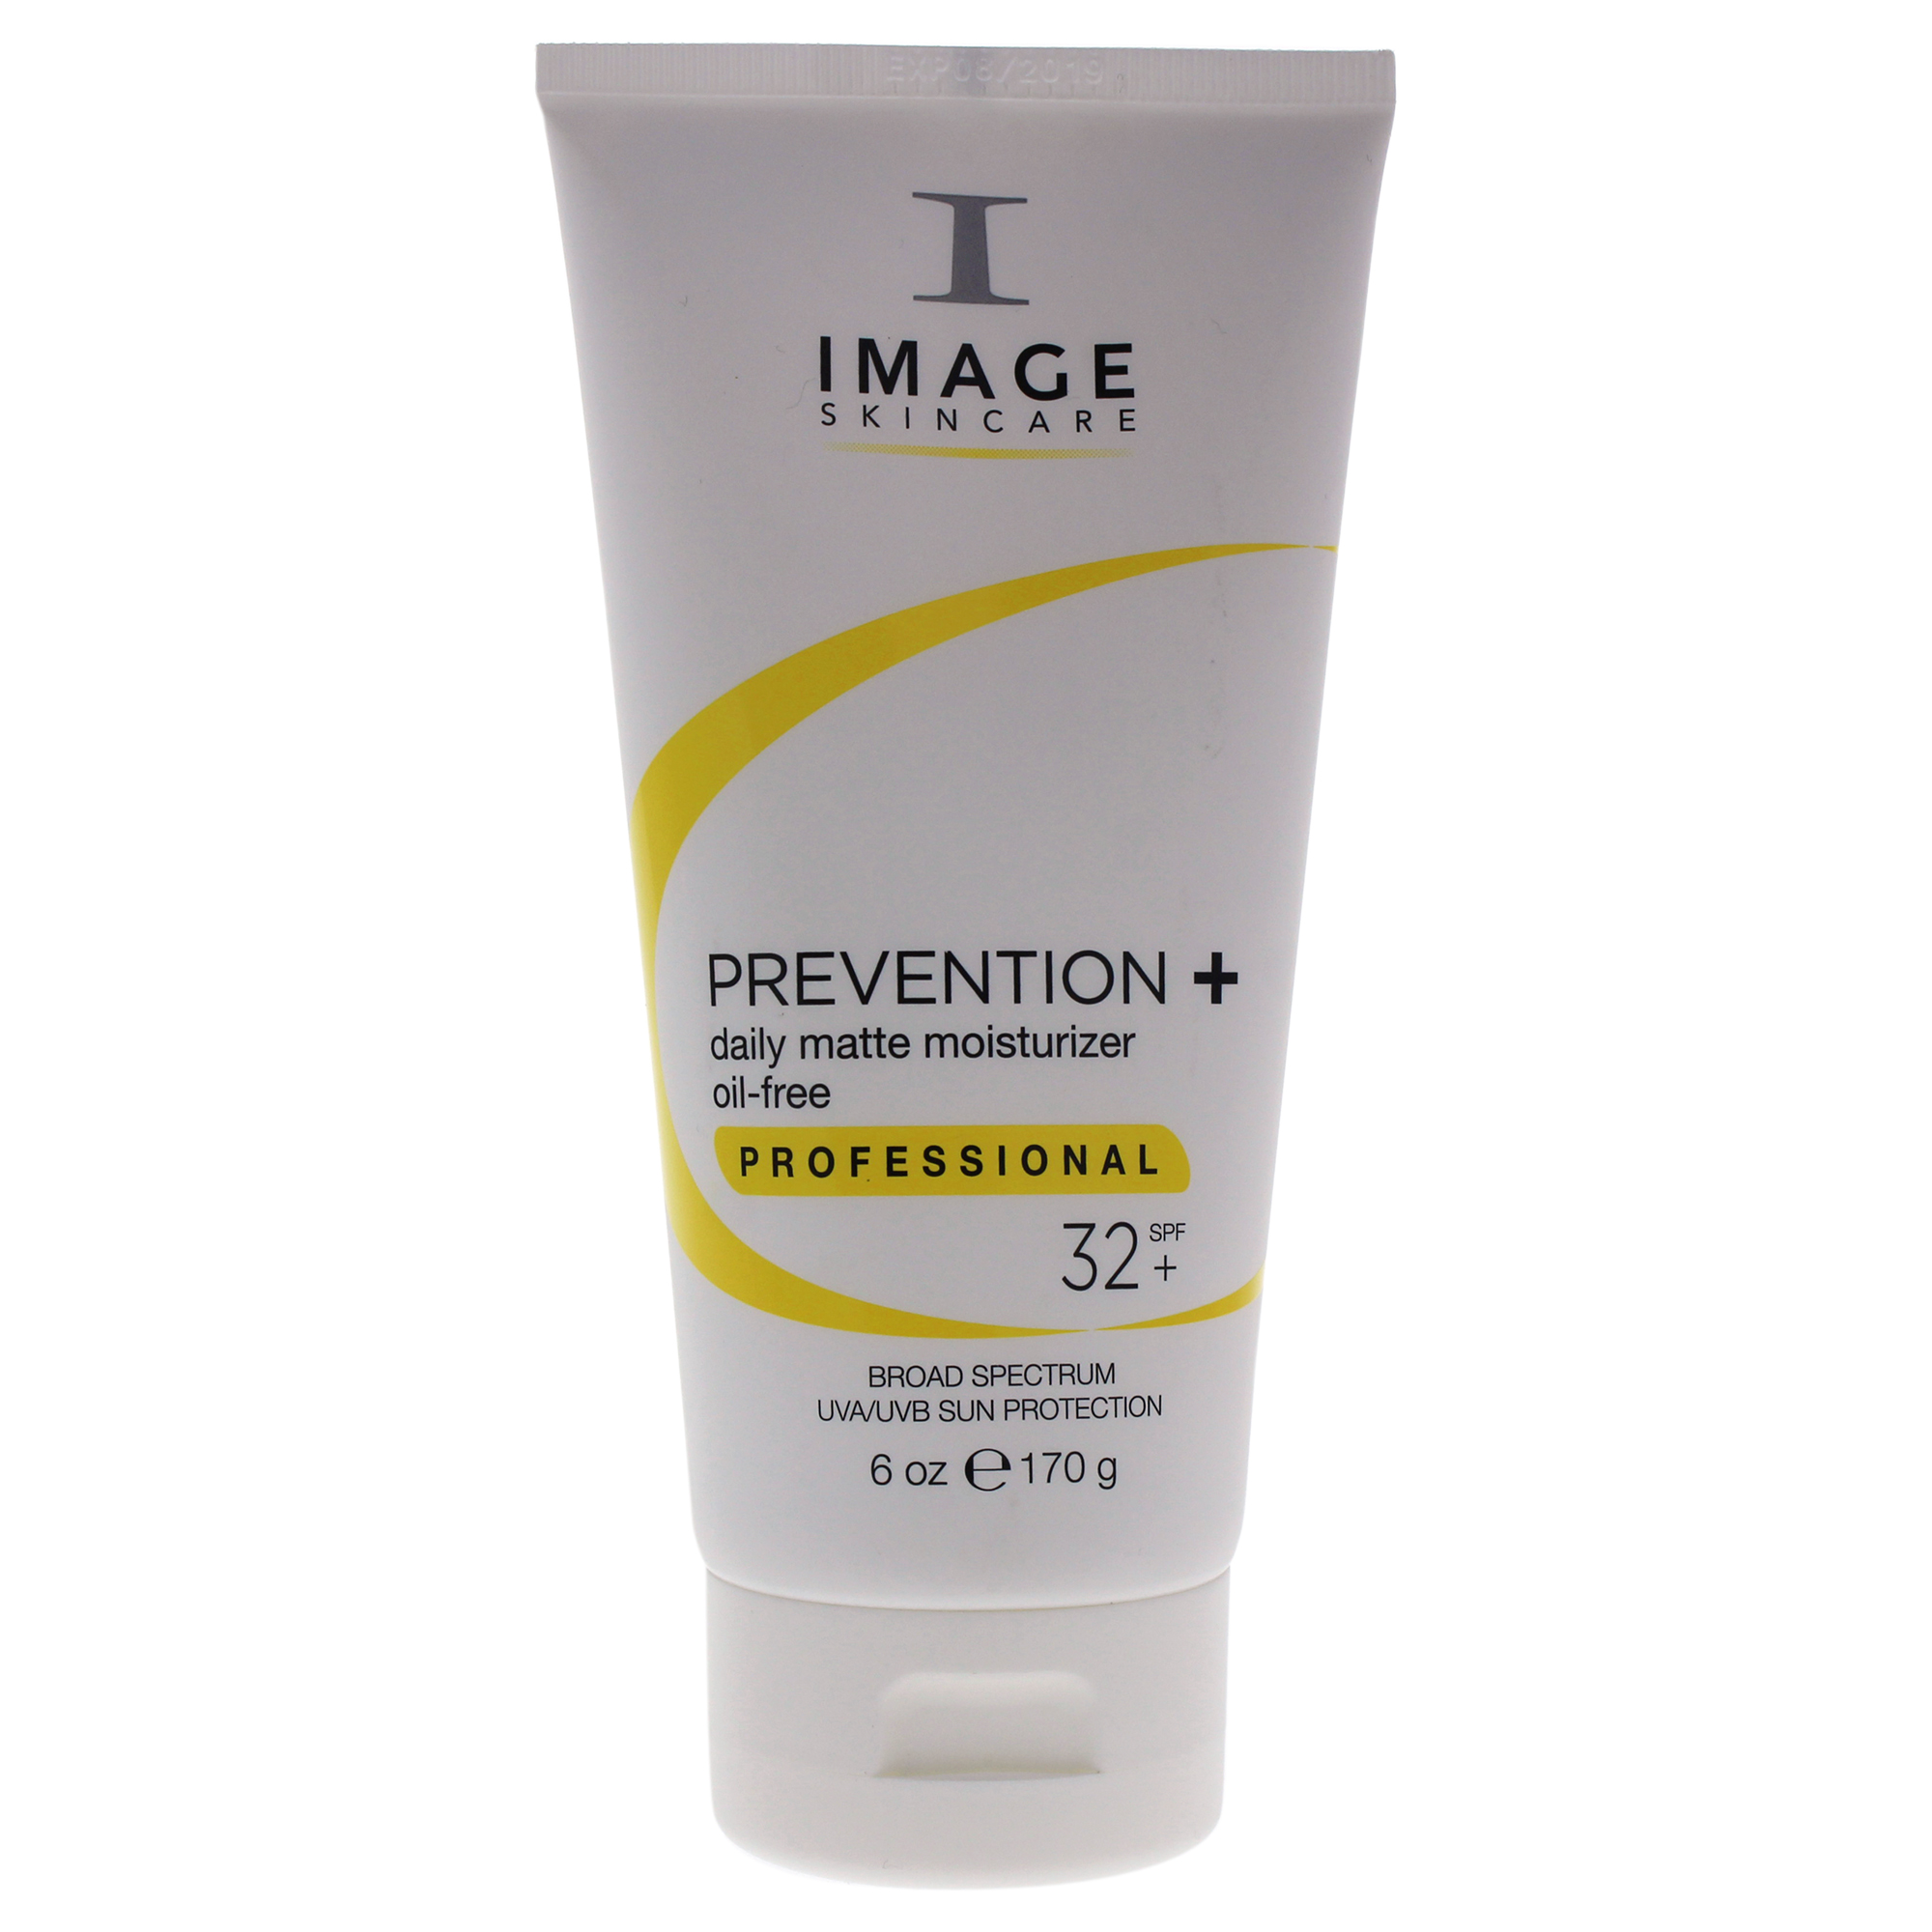 Image Skincare Prevention + Daily Matte Moisturizer 6 oz Oil-Free Professional SPF 32+ Broad Spectrum UVA/UVB Sun Protection - image 2 of 3